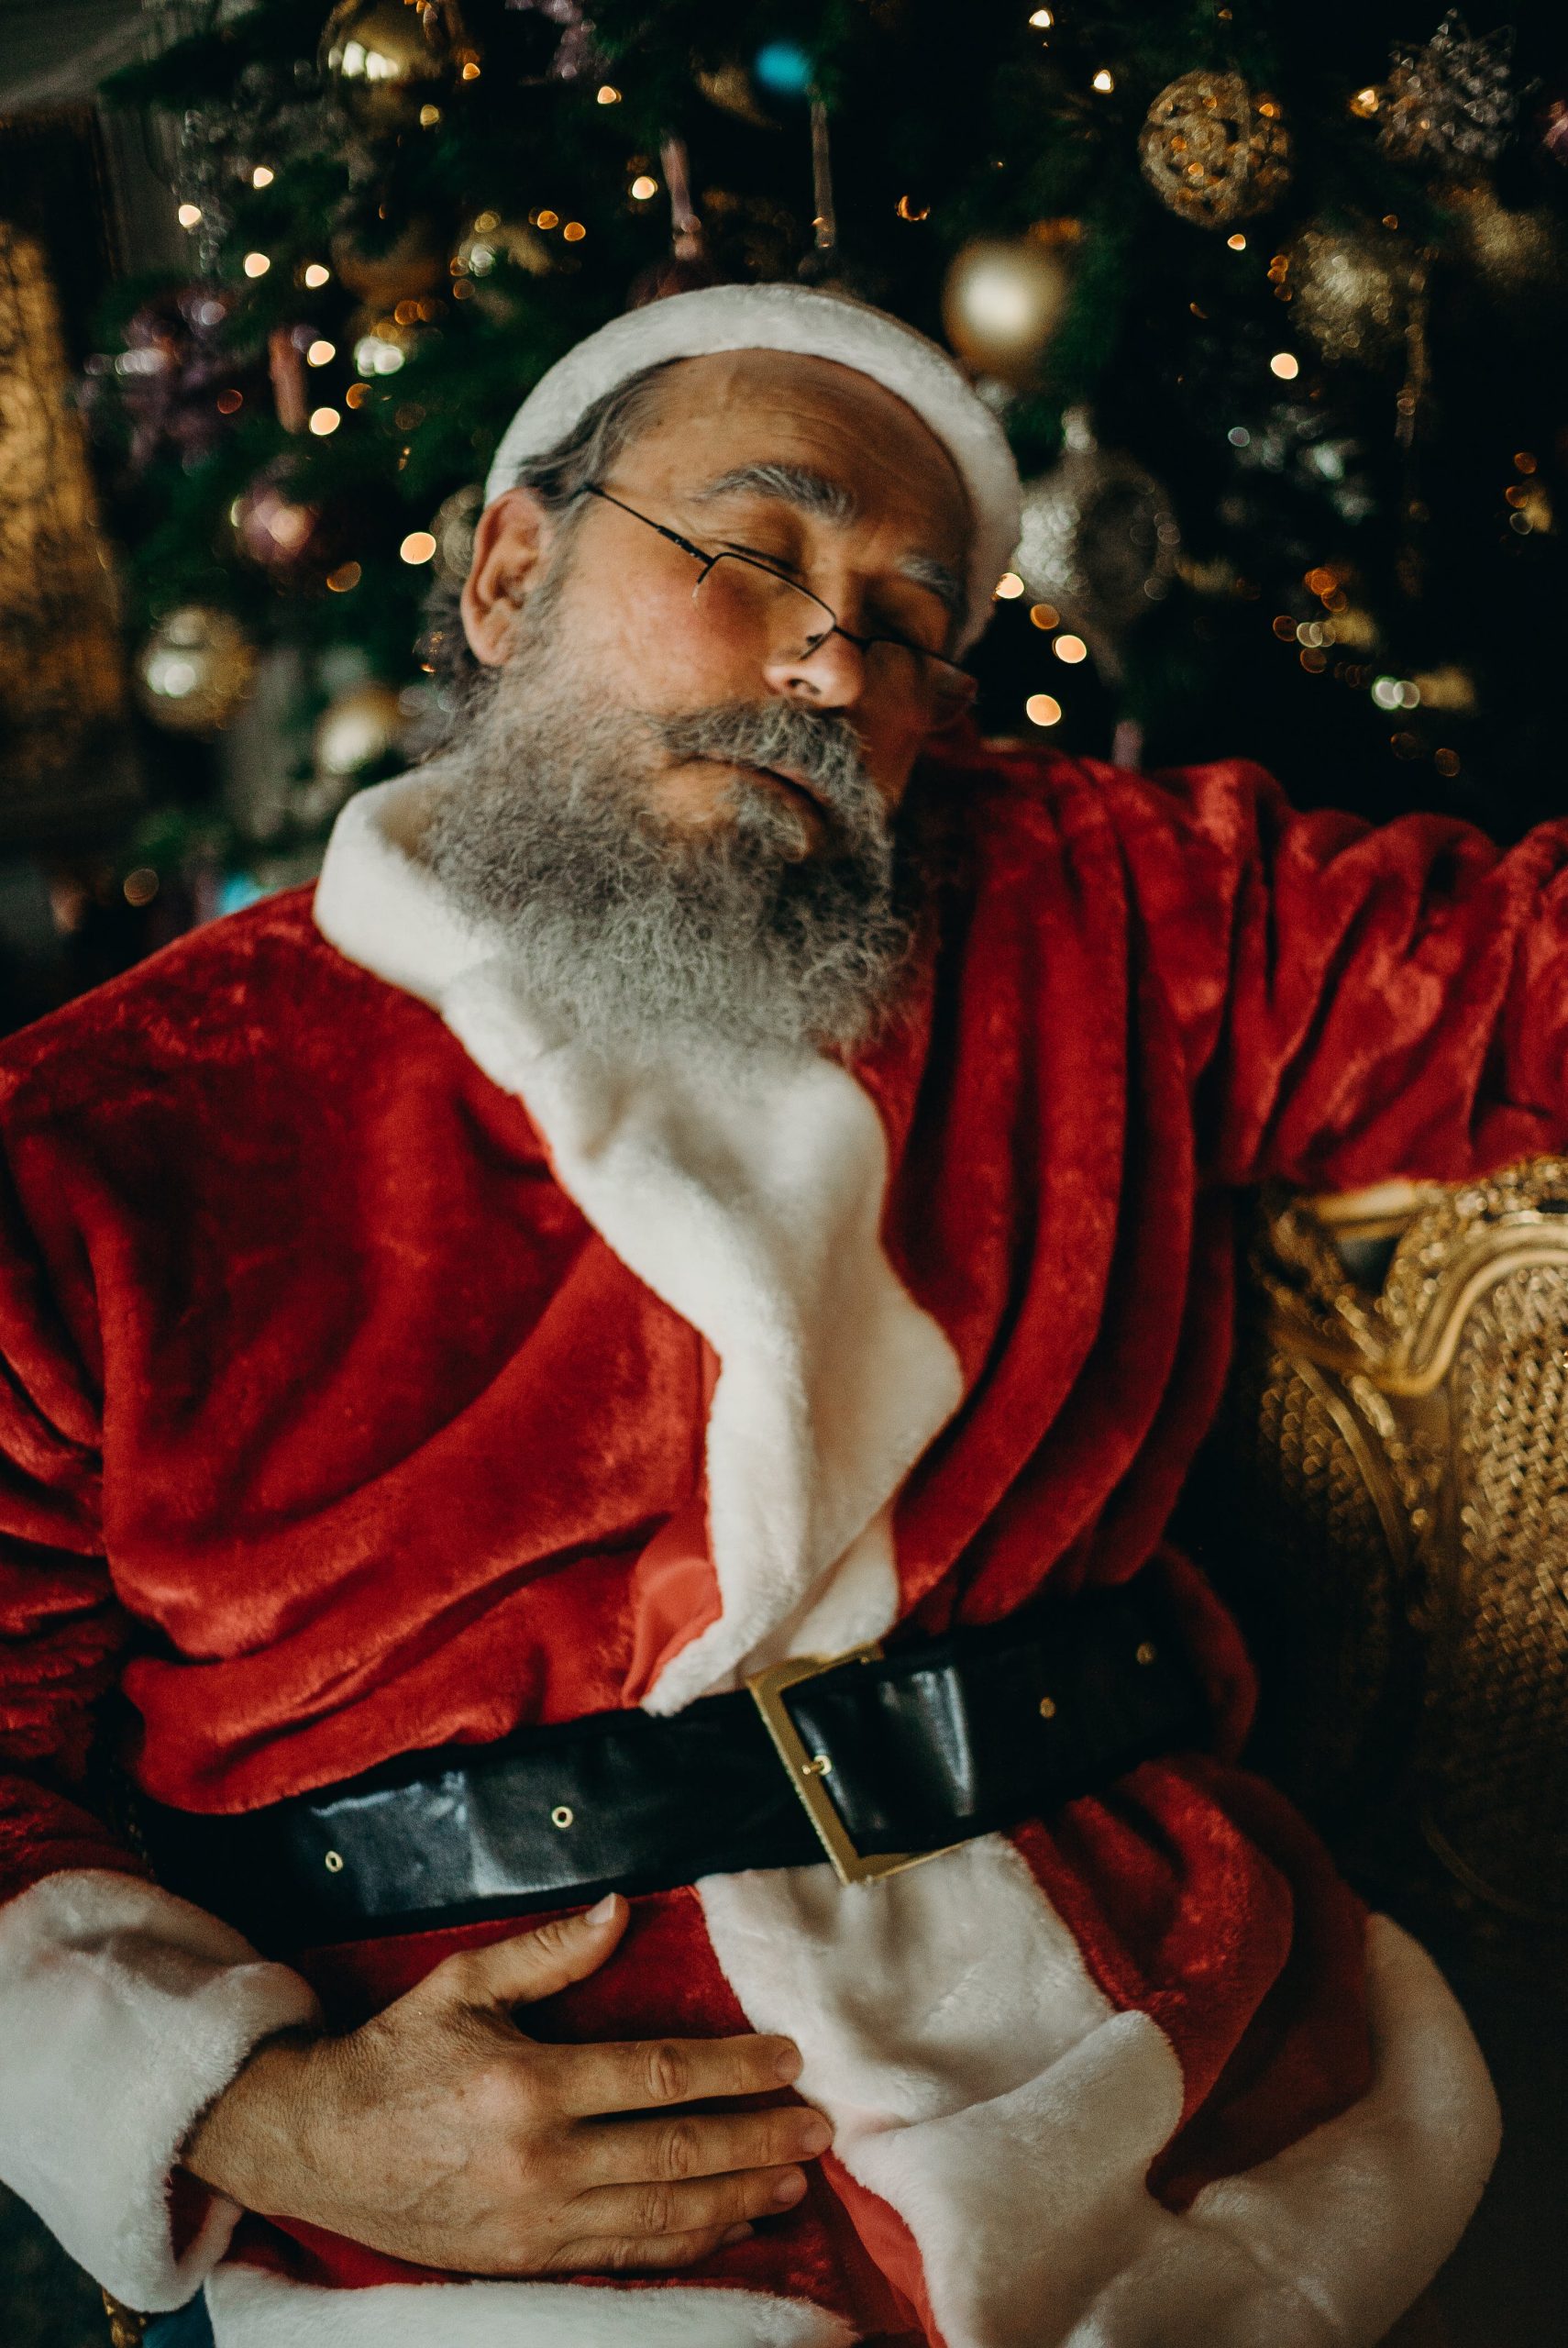 father christmas asleep. Photo by cottonbro studio. Pexels.com